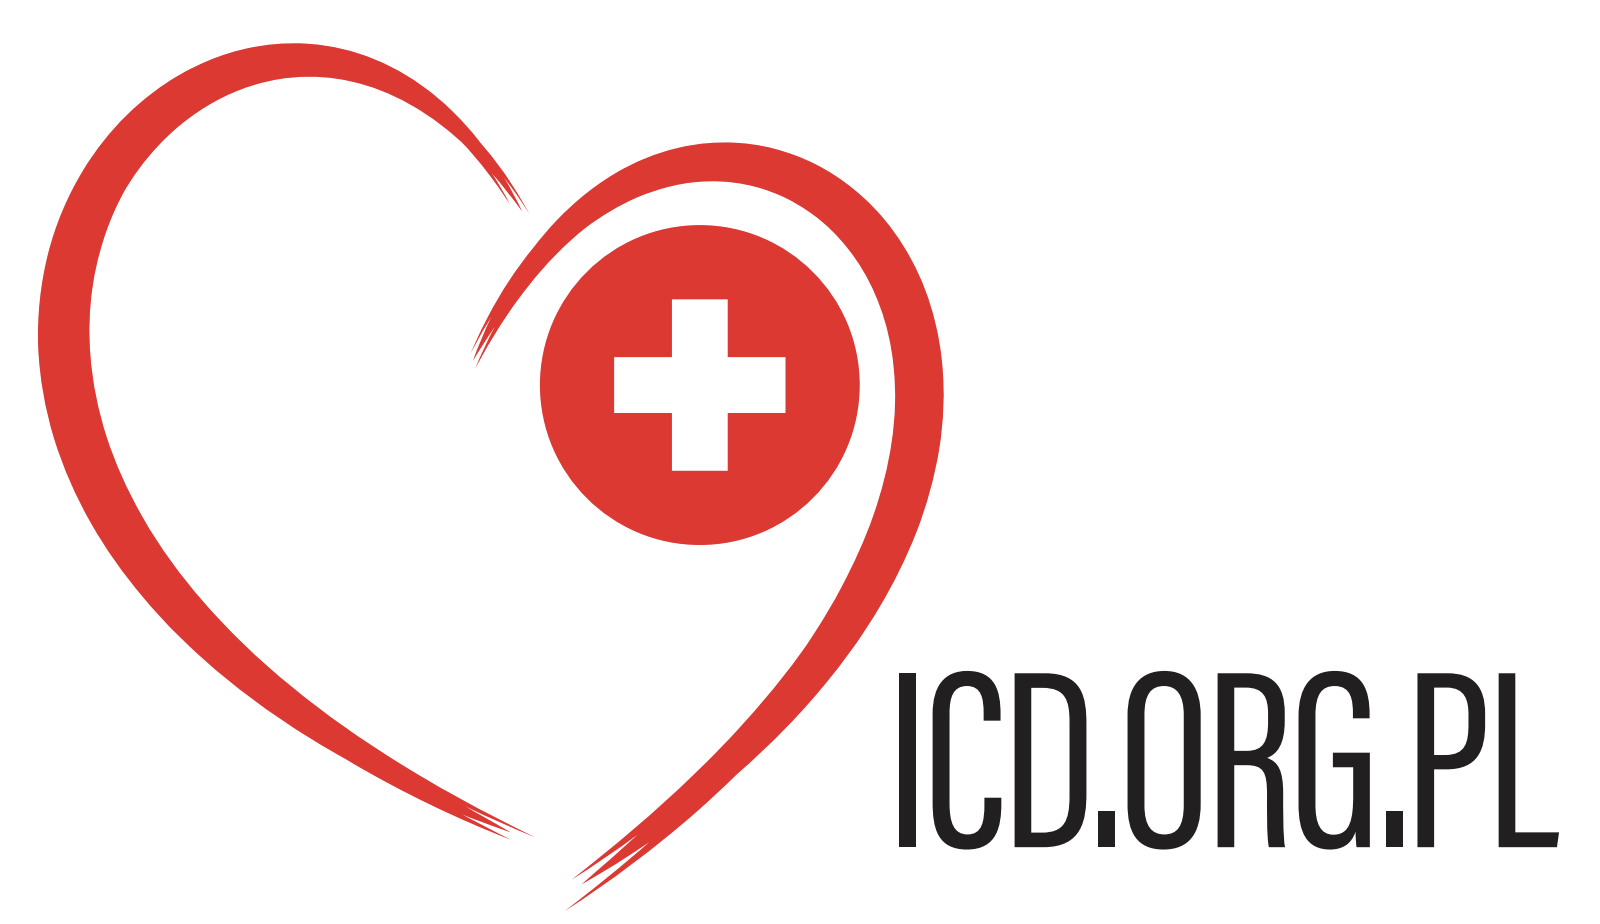 ICDefibrillators